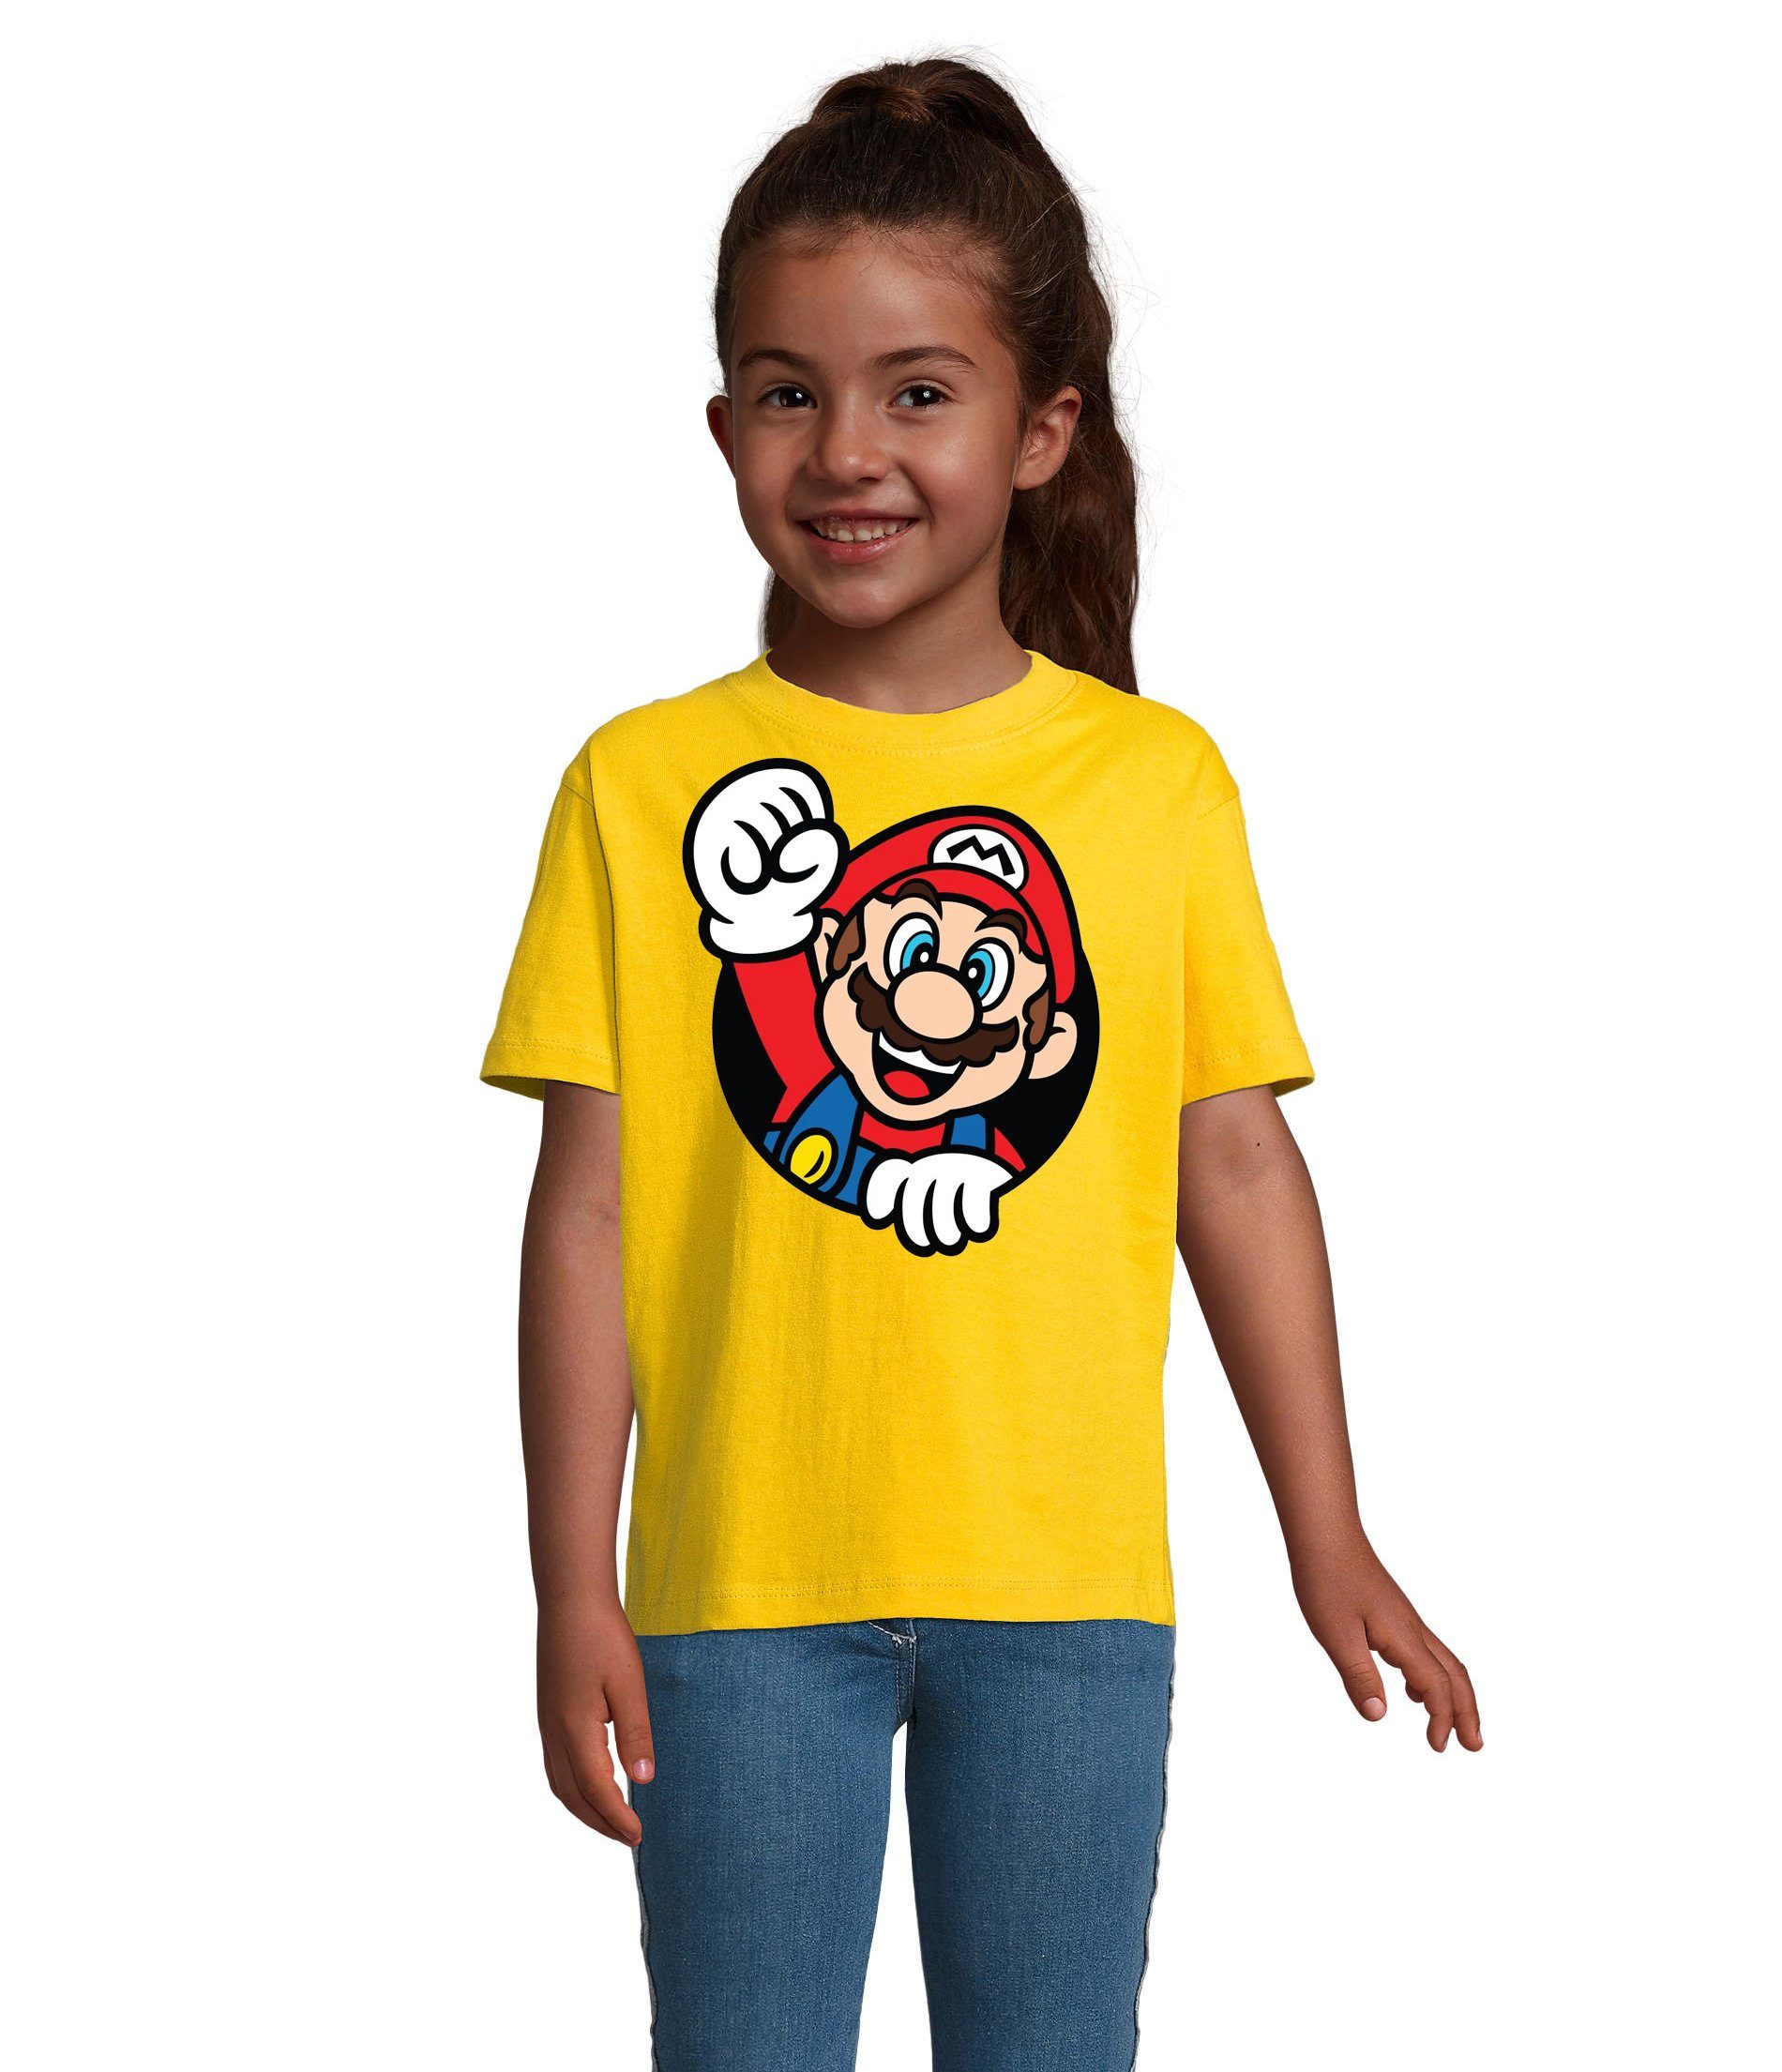 Konsole Nerd Brownie Gelb Mario Super Faust T-Shirt & Nintendo Gaming Kinder Spiel Konsole Blondie